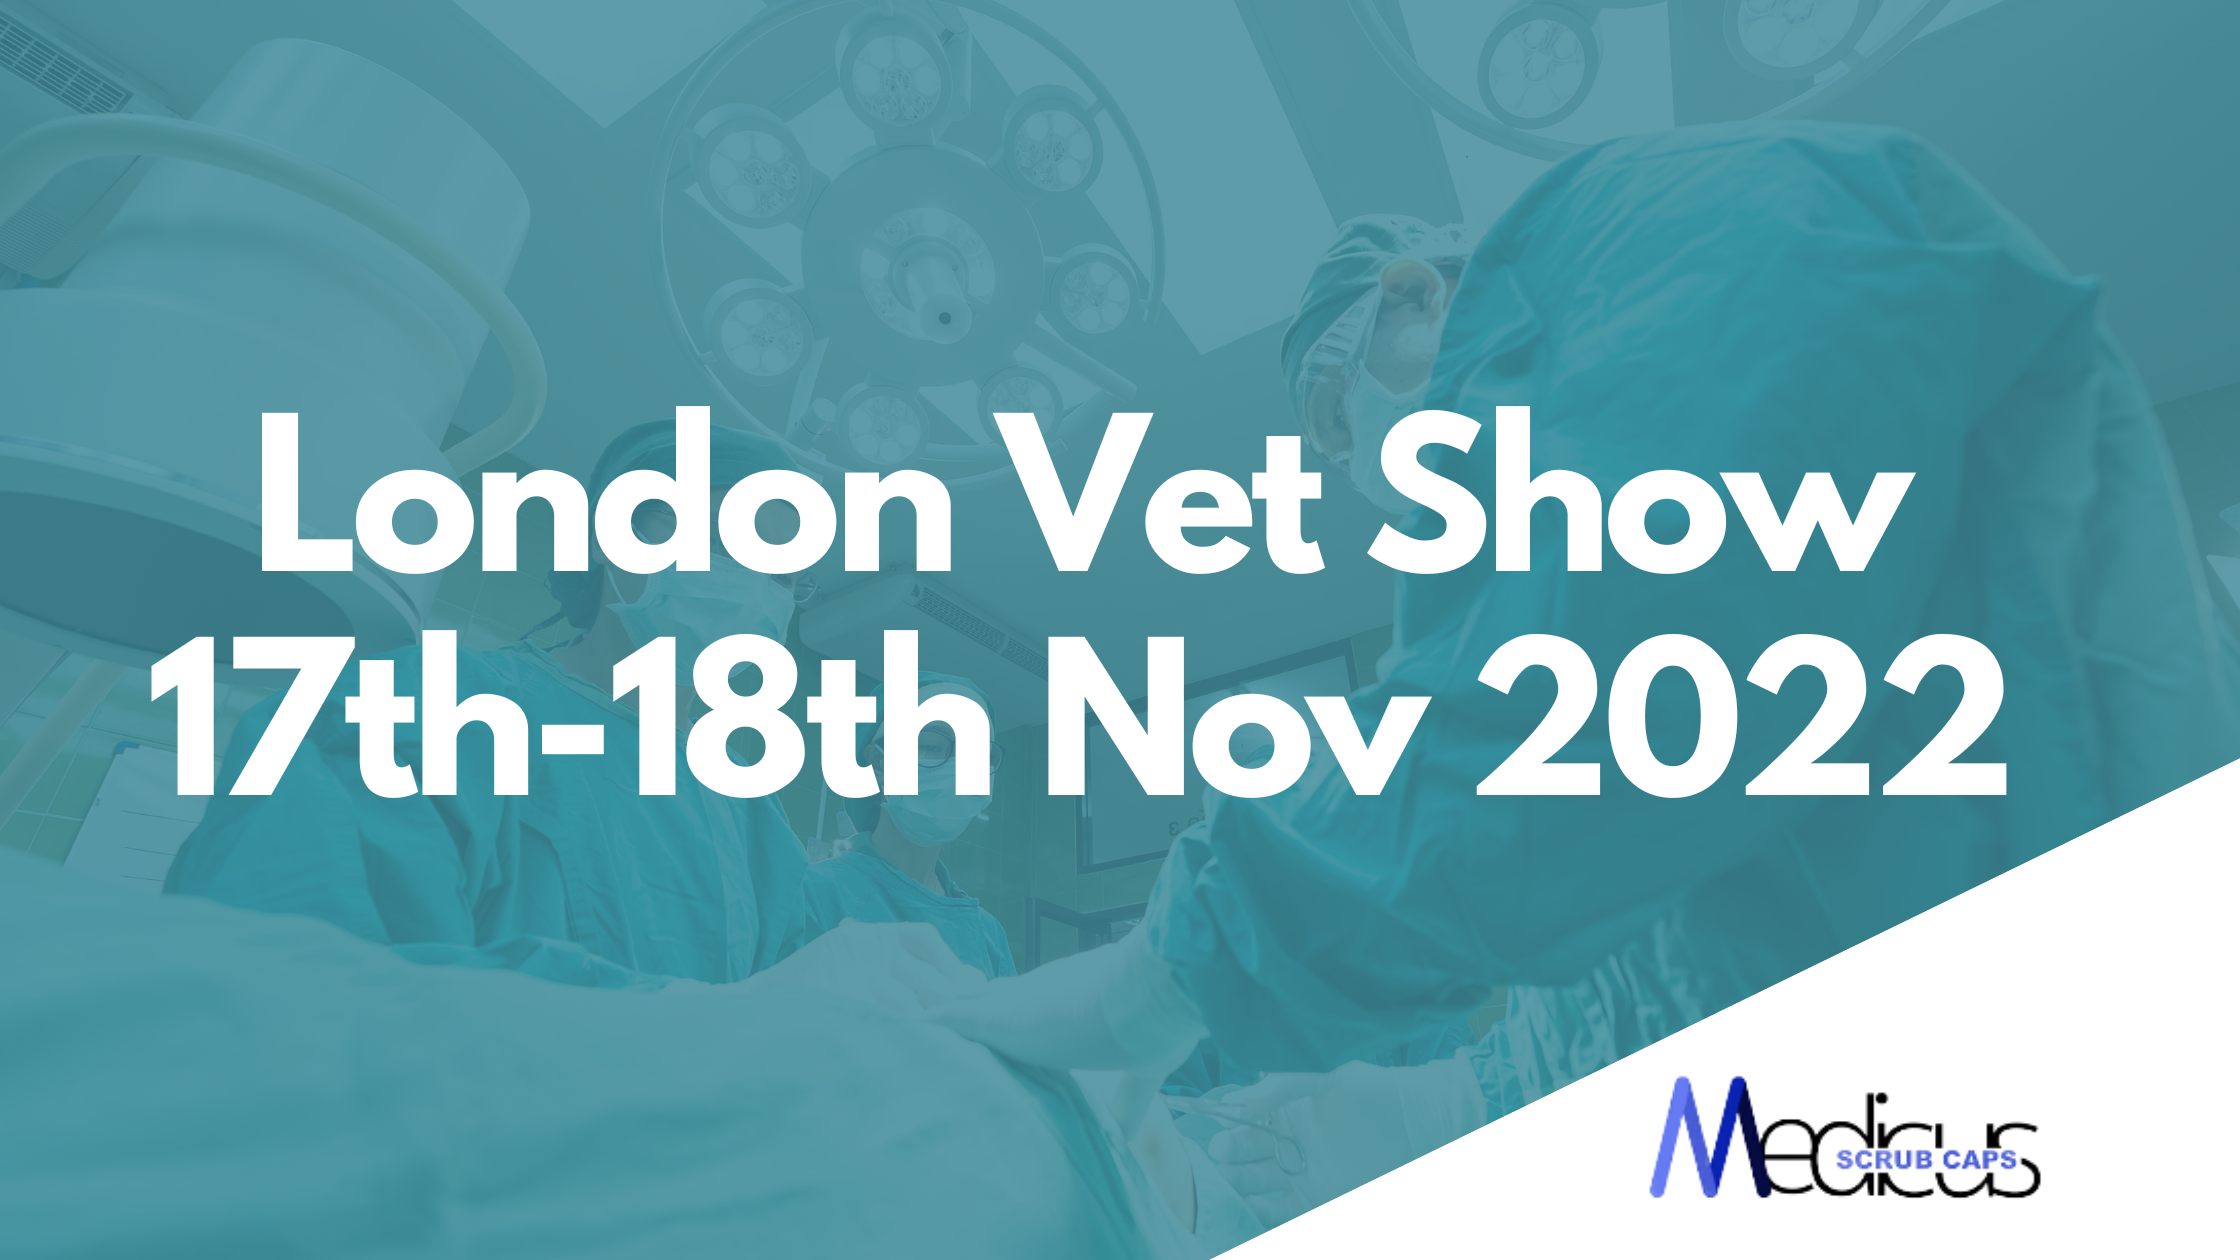 Medicus Caps @ The London Vet Show 2022